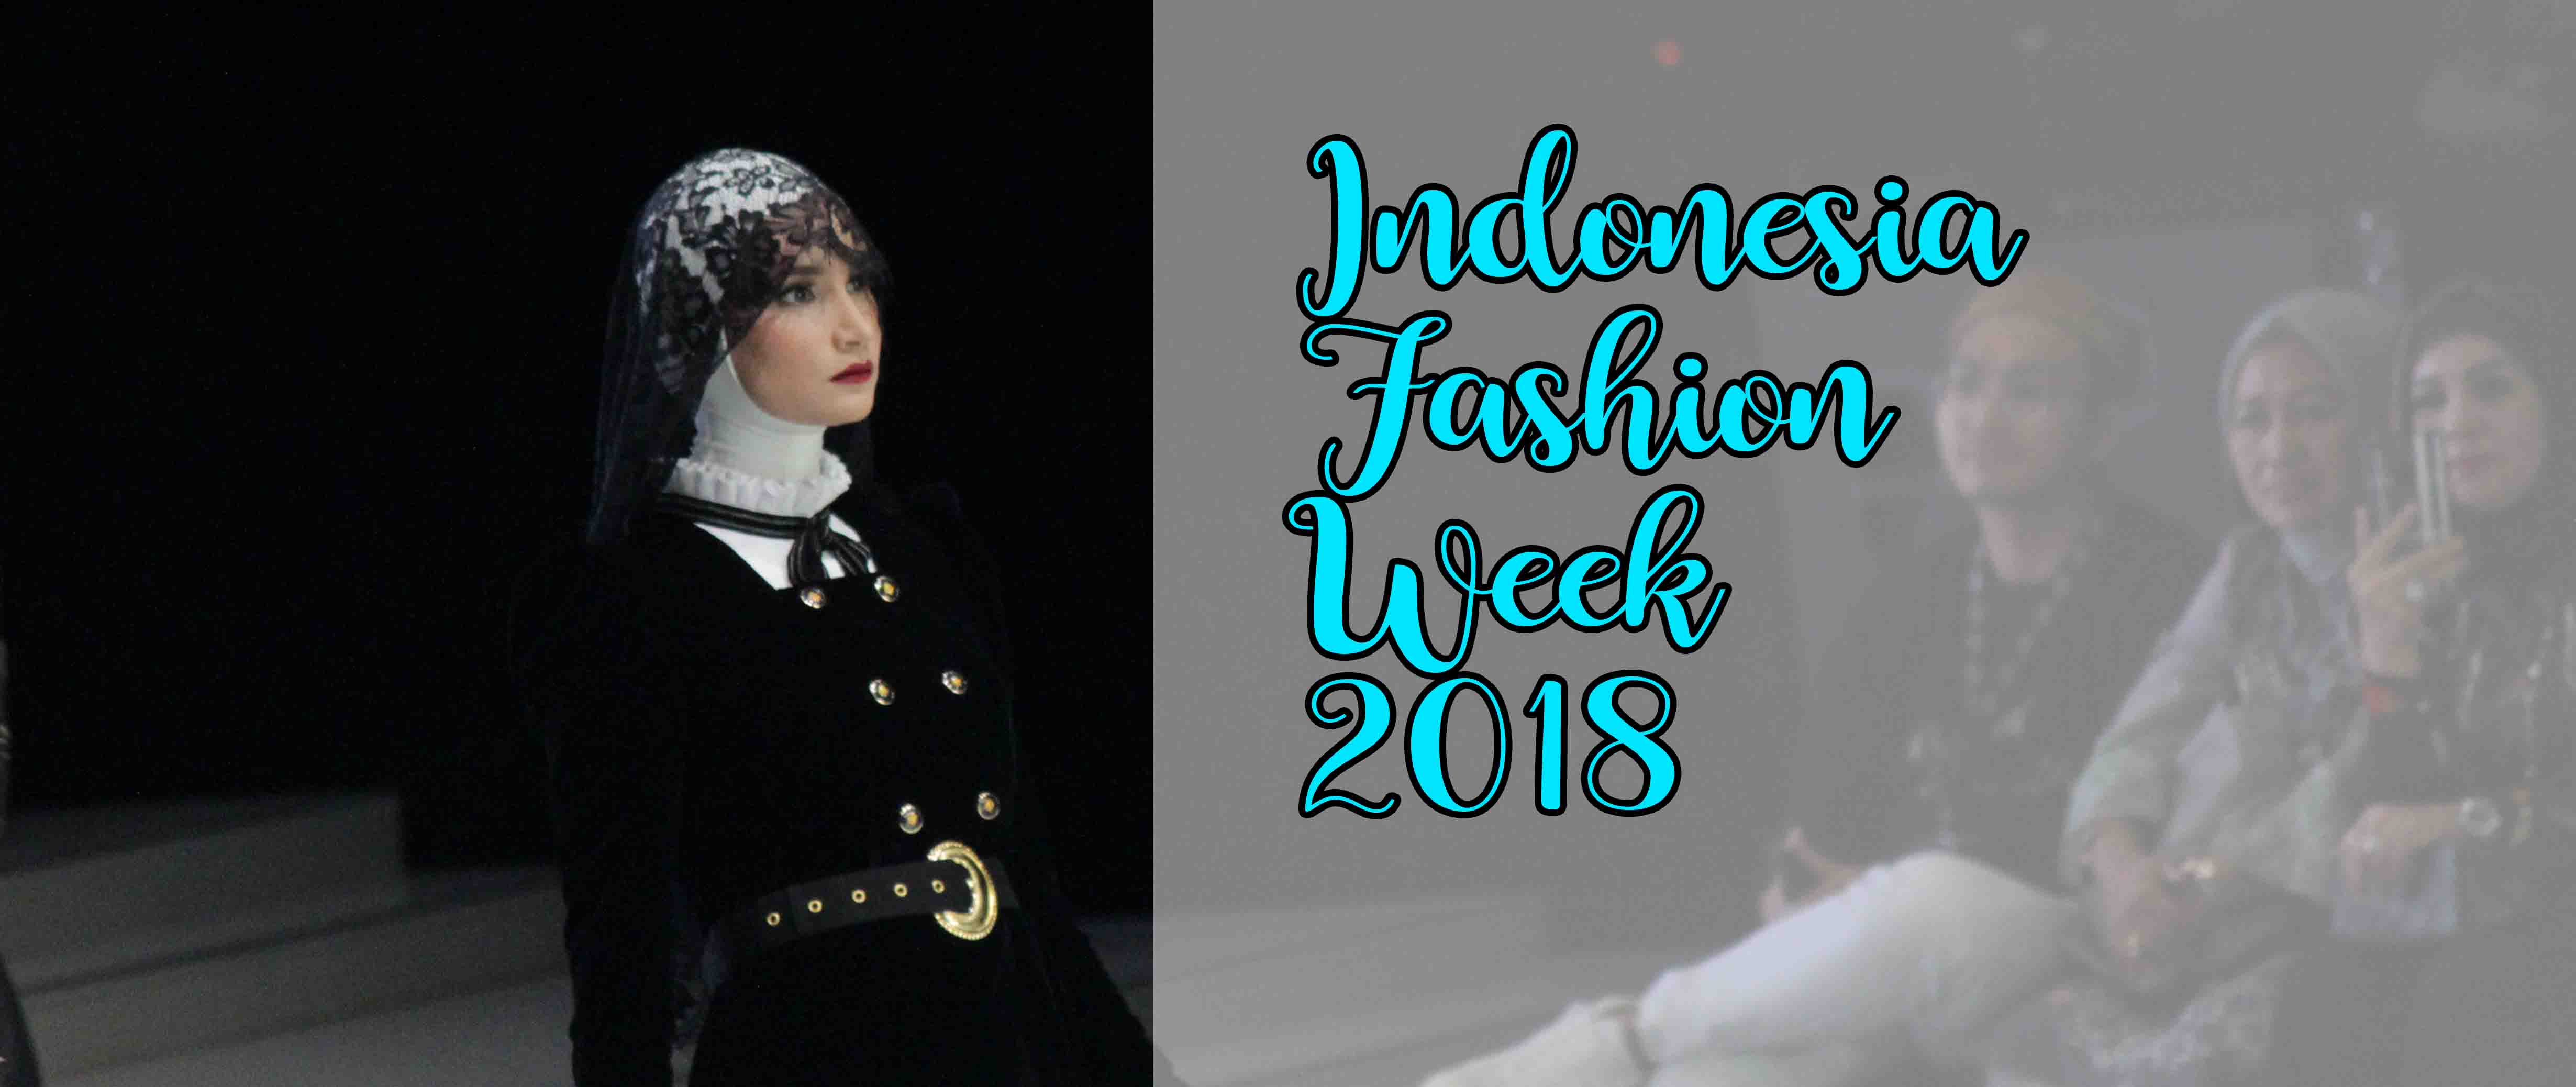 Indonesia Fashion Week 2018